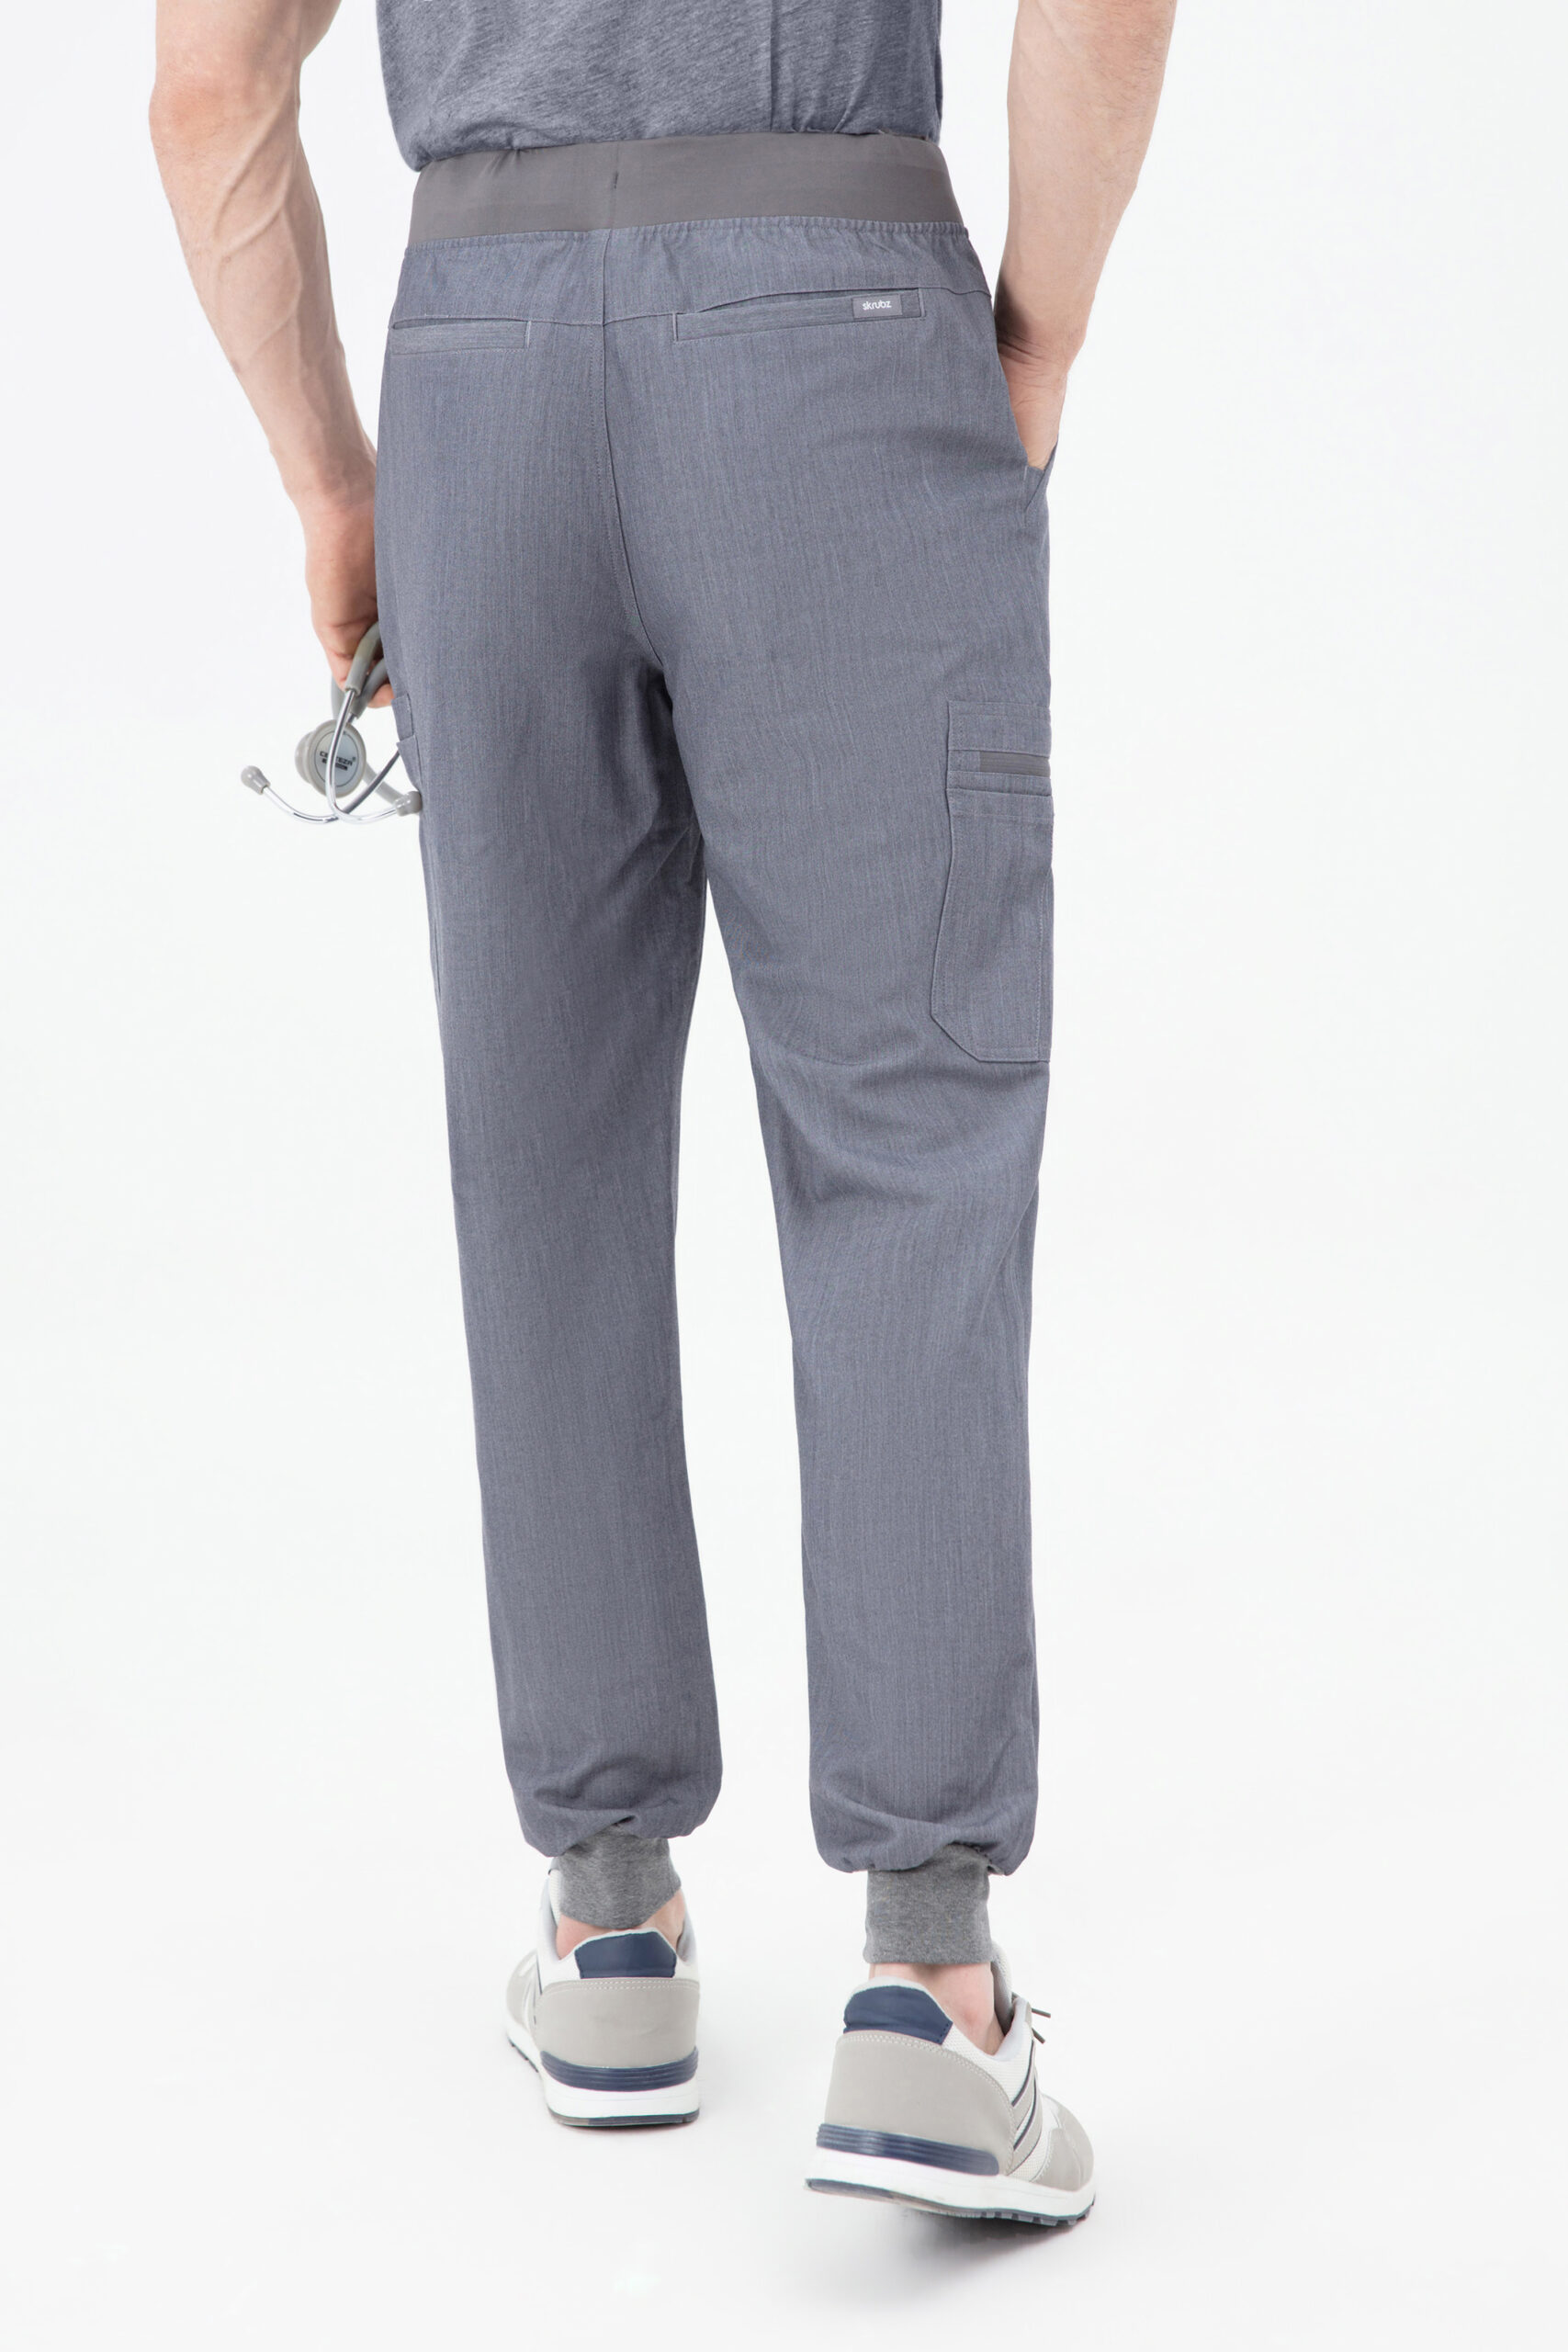 Shiro Yoga Waist 10 pocket Jogger Scrub Pants Mens in 8 Colors